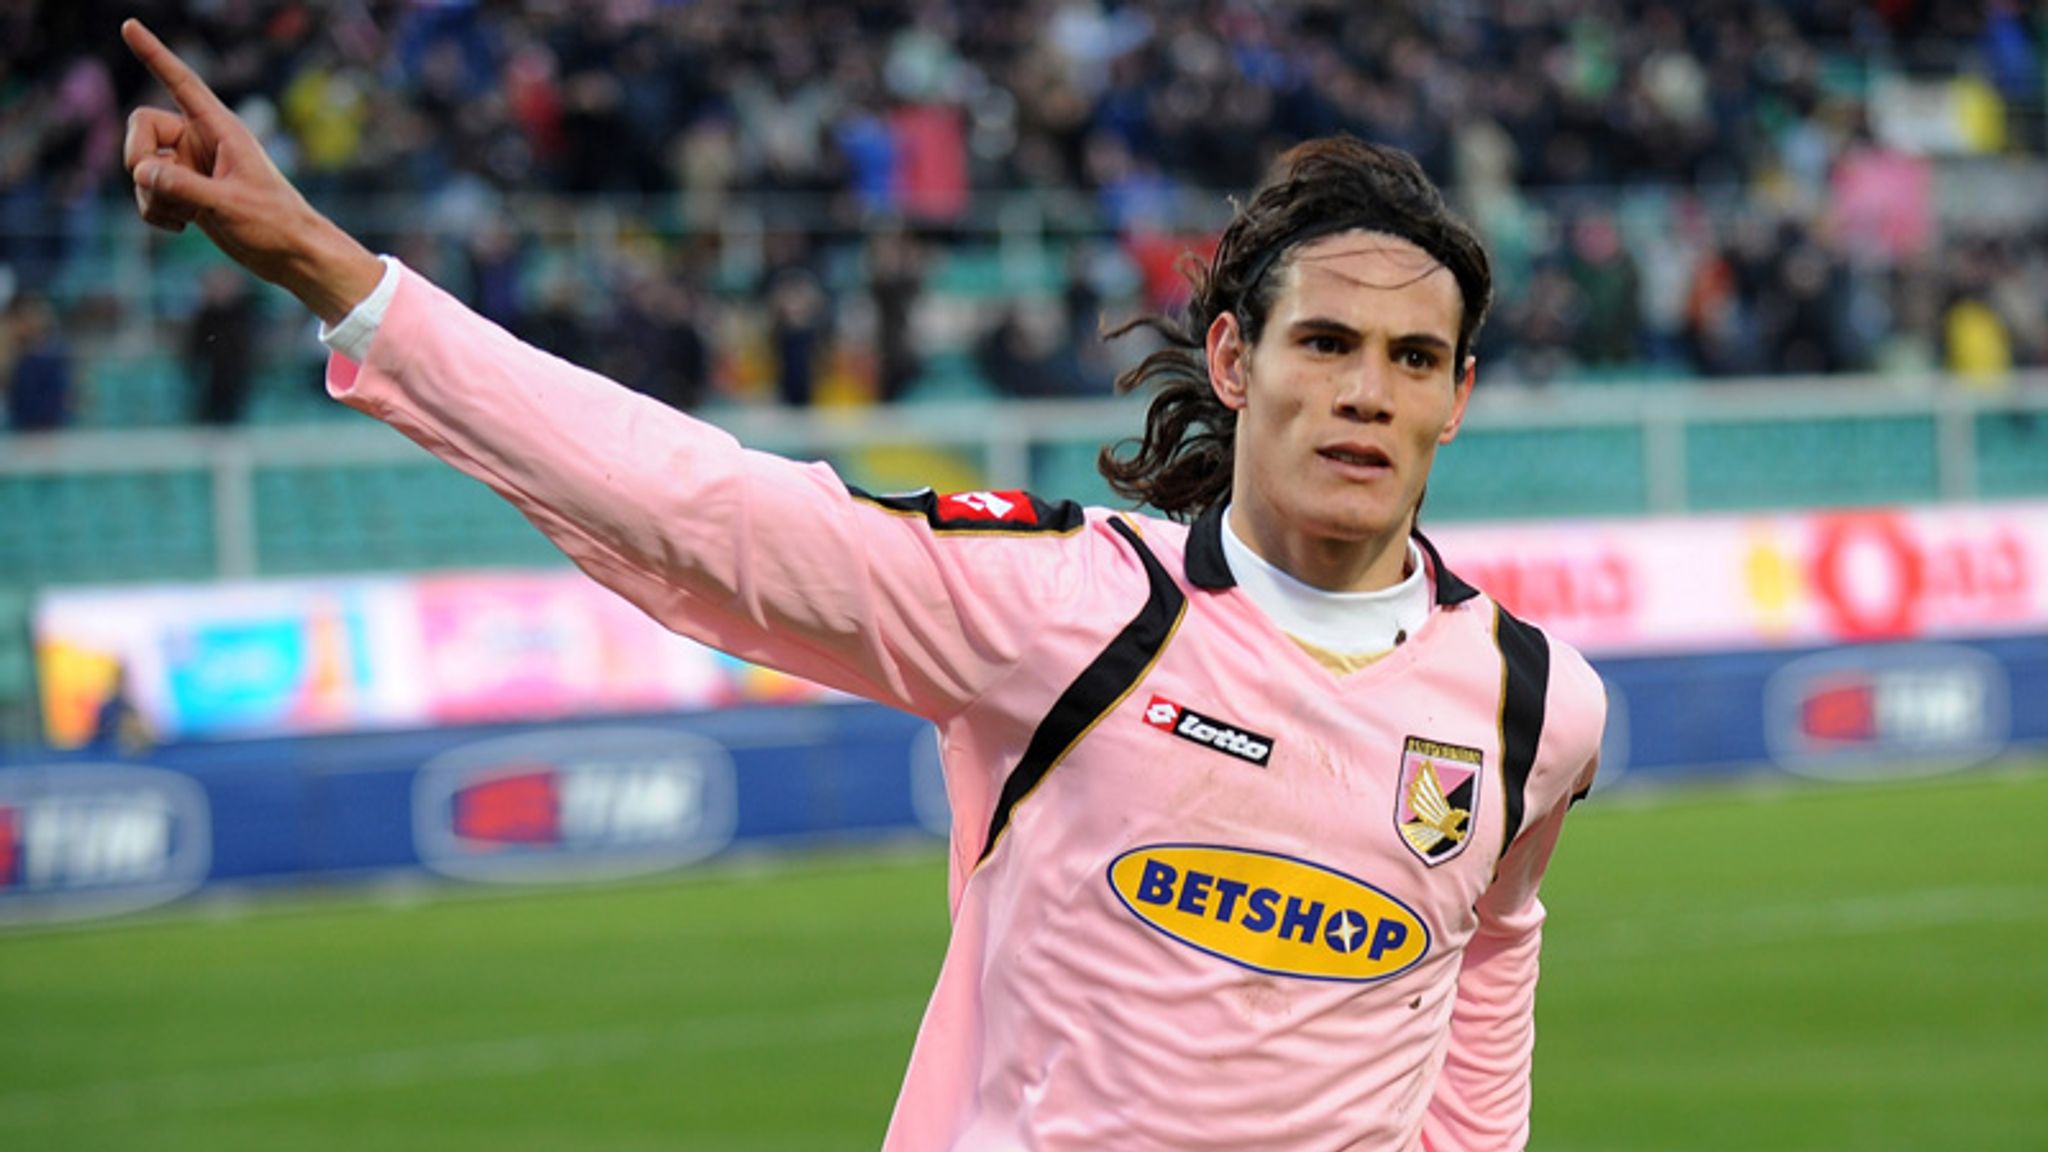 Palermo F.C.